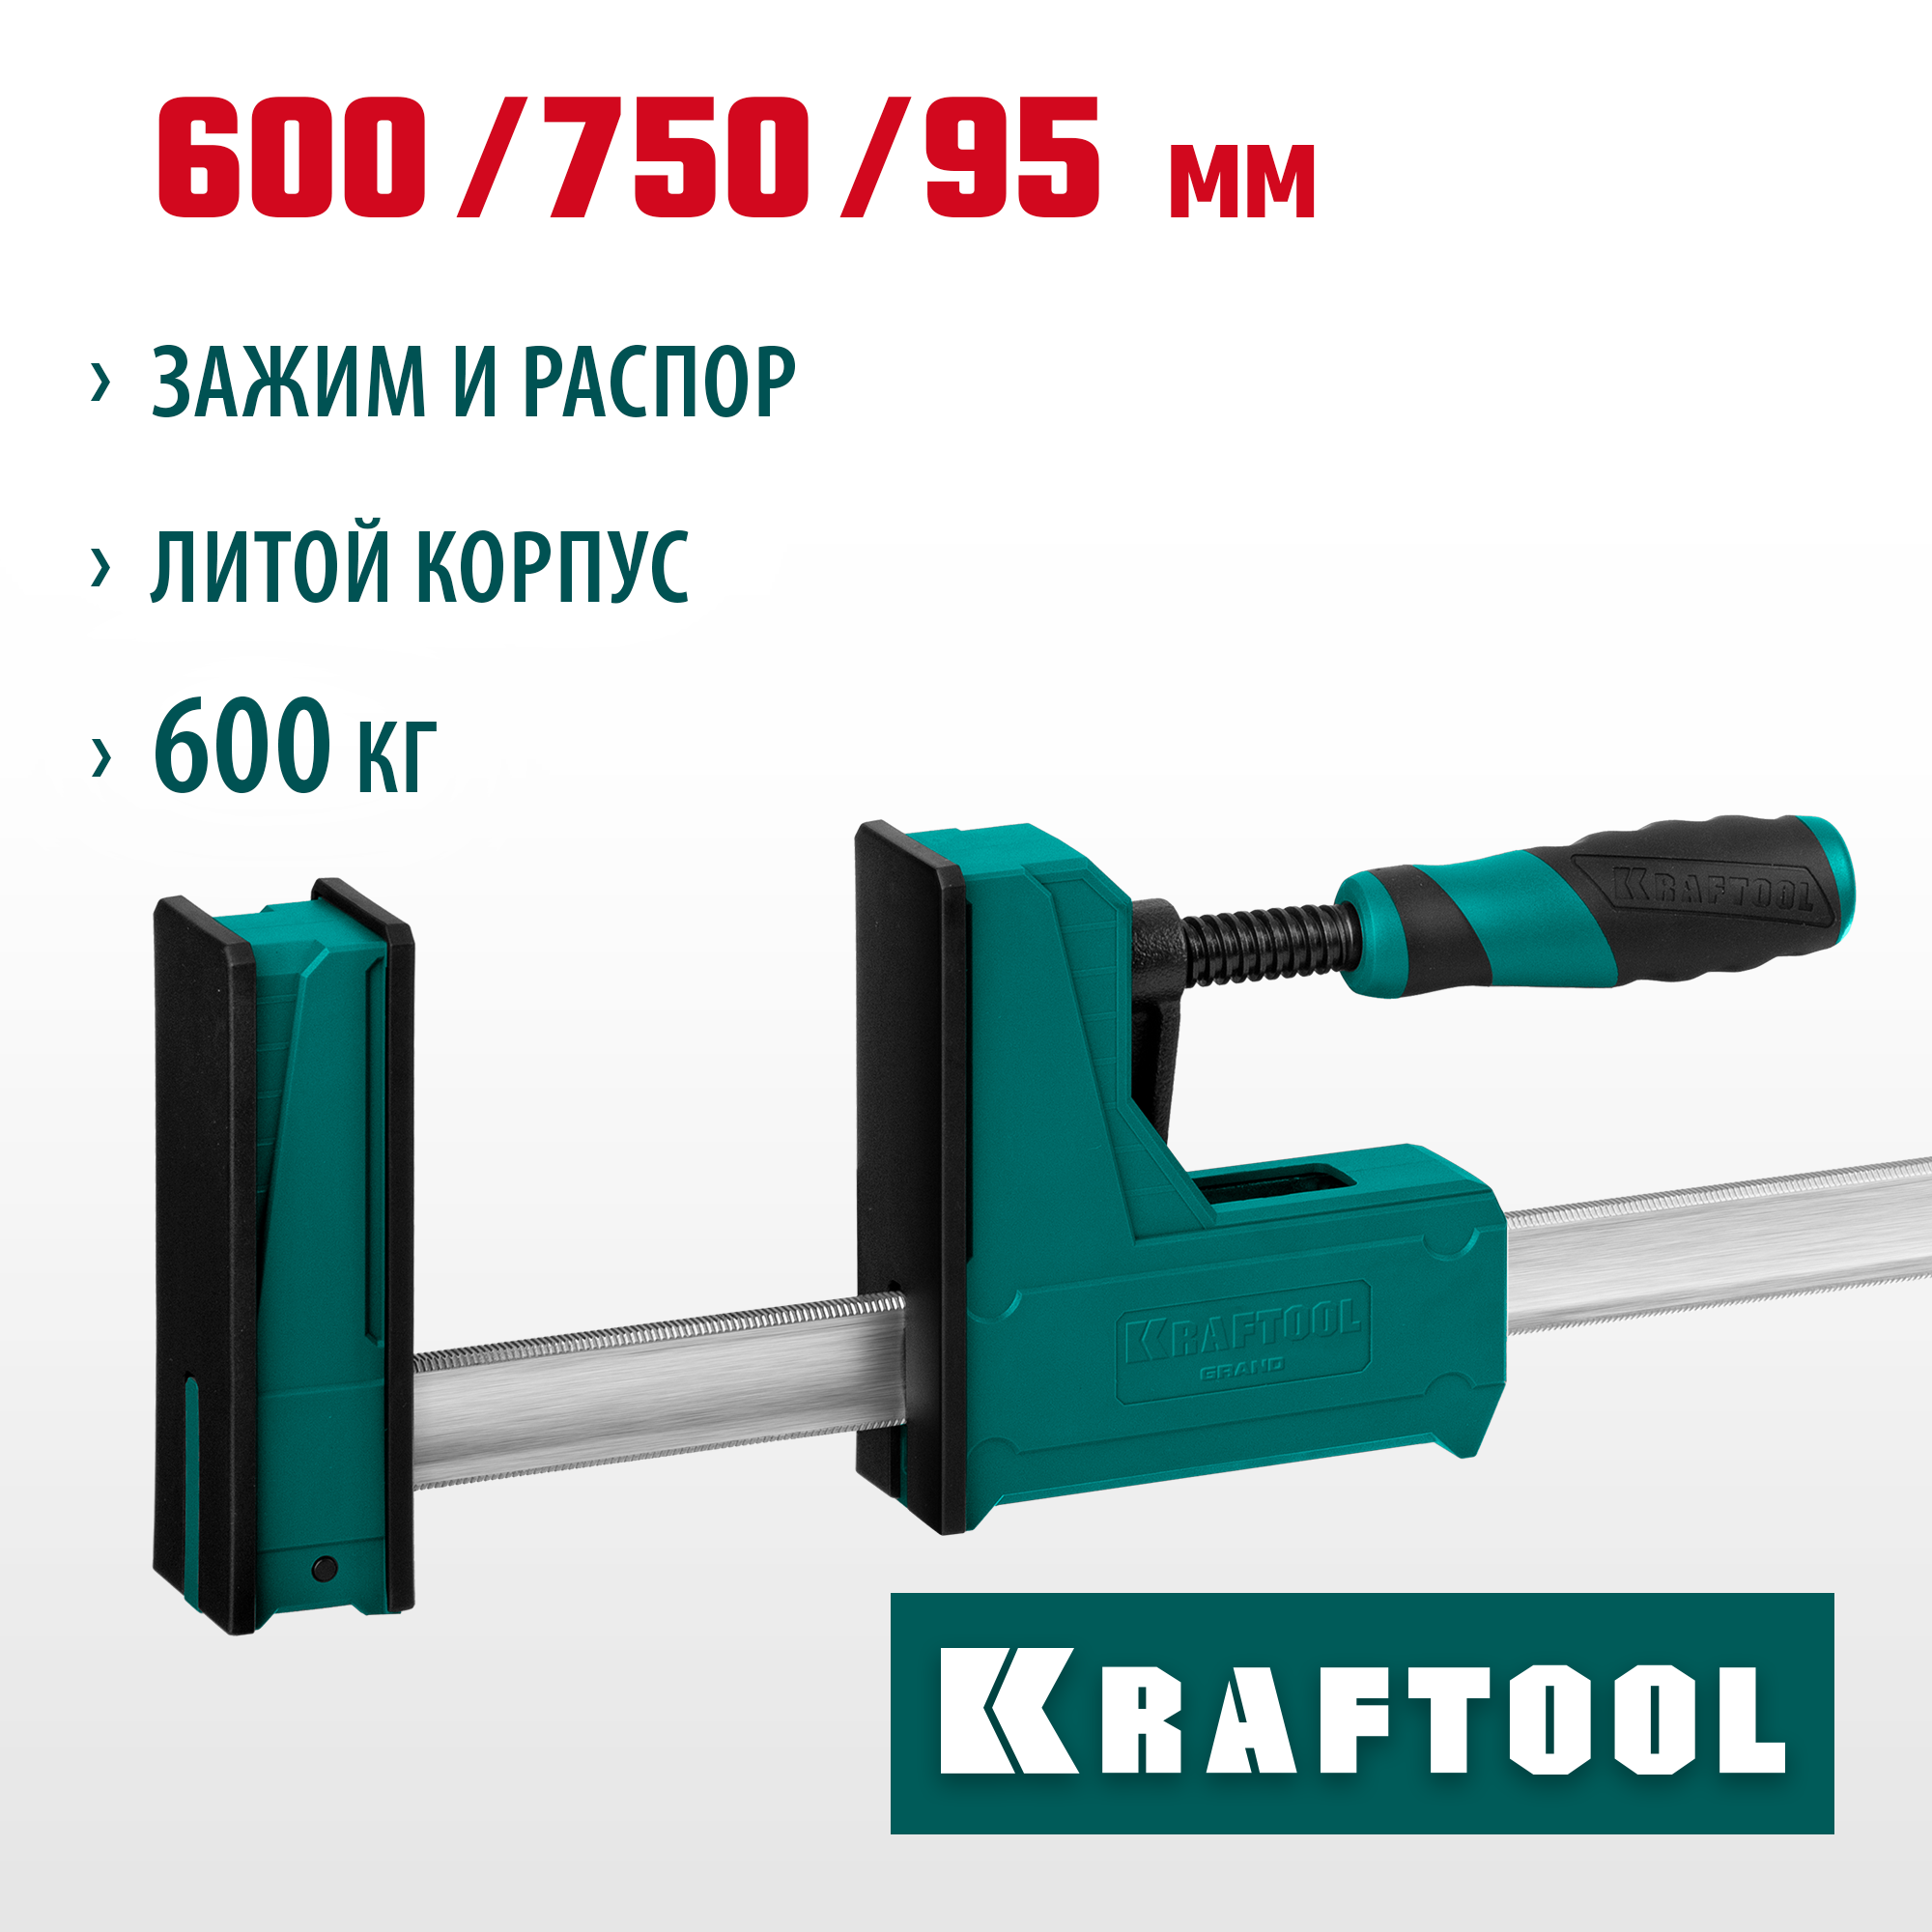 KRAFTOOL GRAND-600/750 600/750 мм, сжатие/распор, 600 кгс, глубина зажима 95 мм, Корпусная струбцина (32240-60)